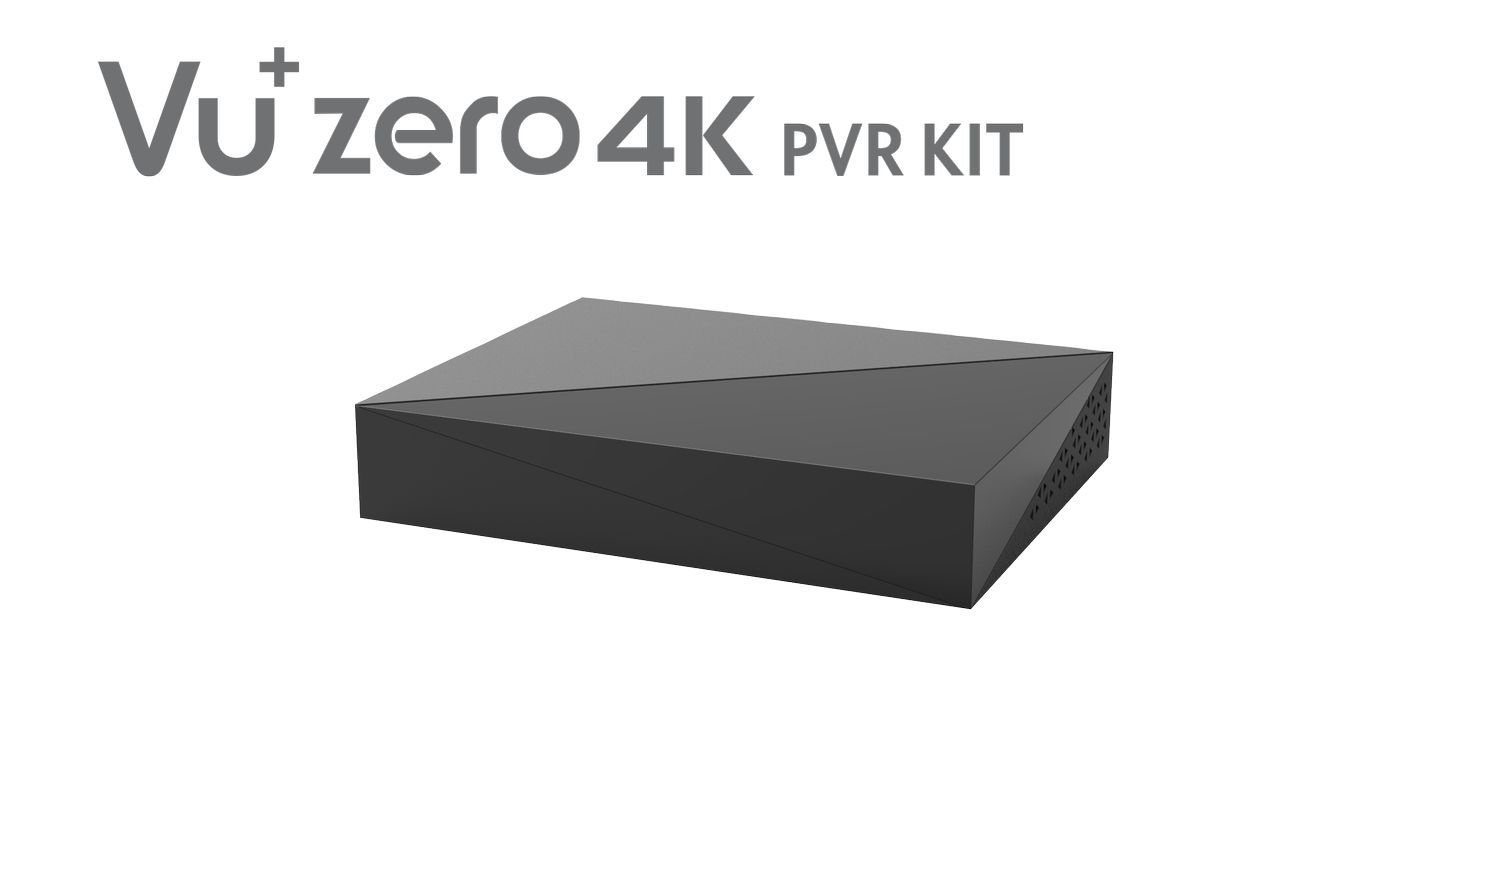 1TB, VU+ 620462 PVR Zero 4K Kit schwarz Tuner HDD, Inklusive VU+